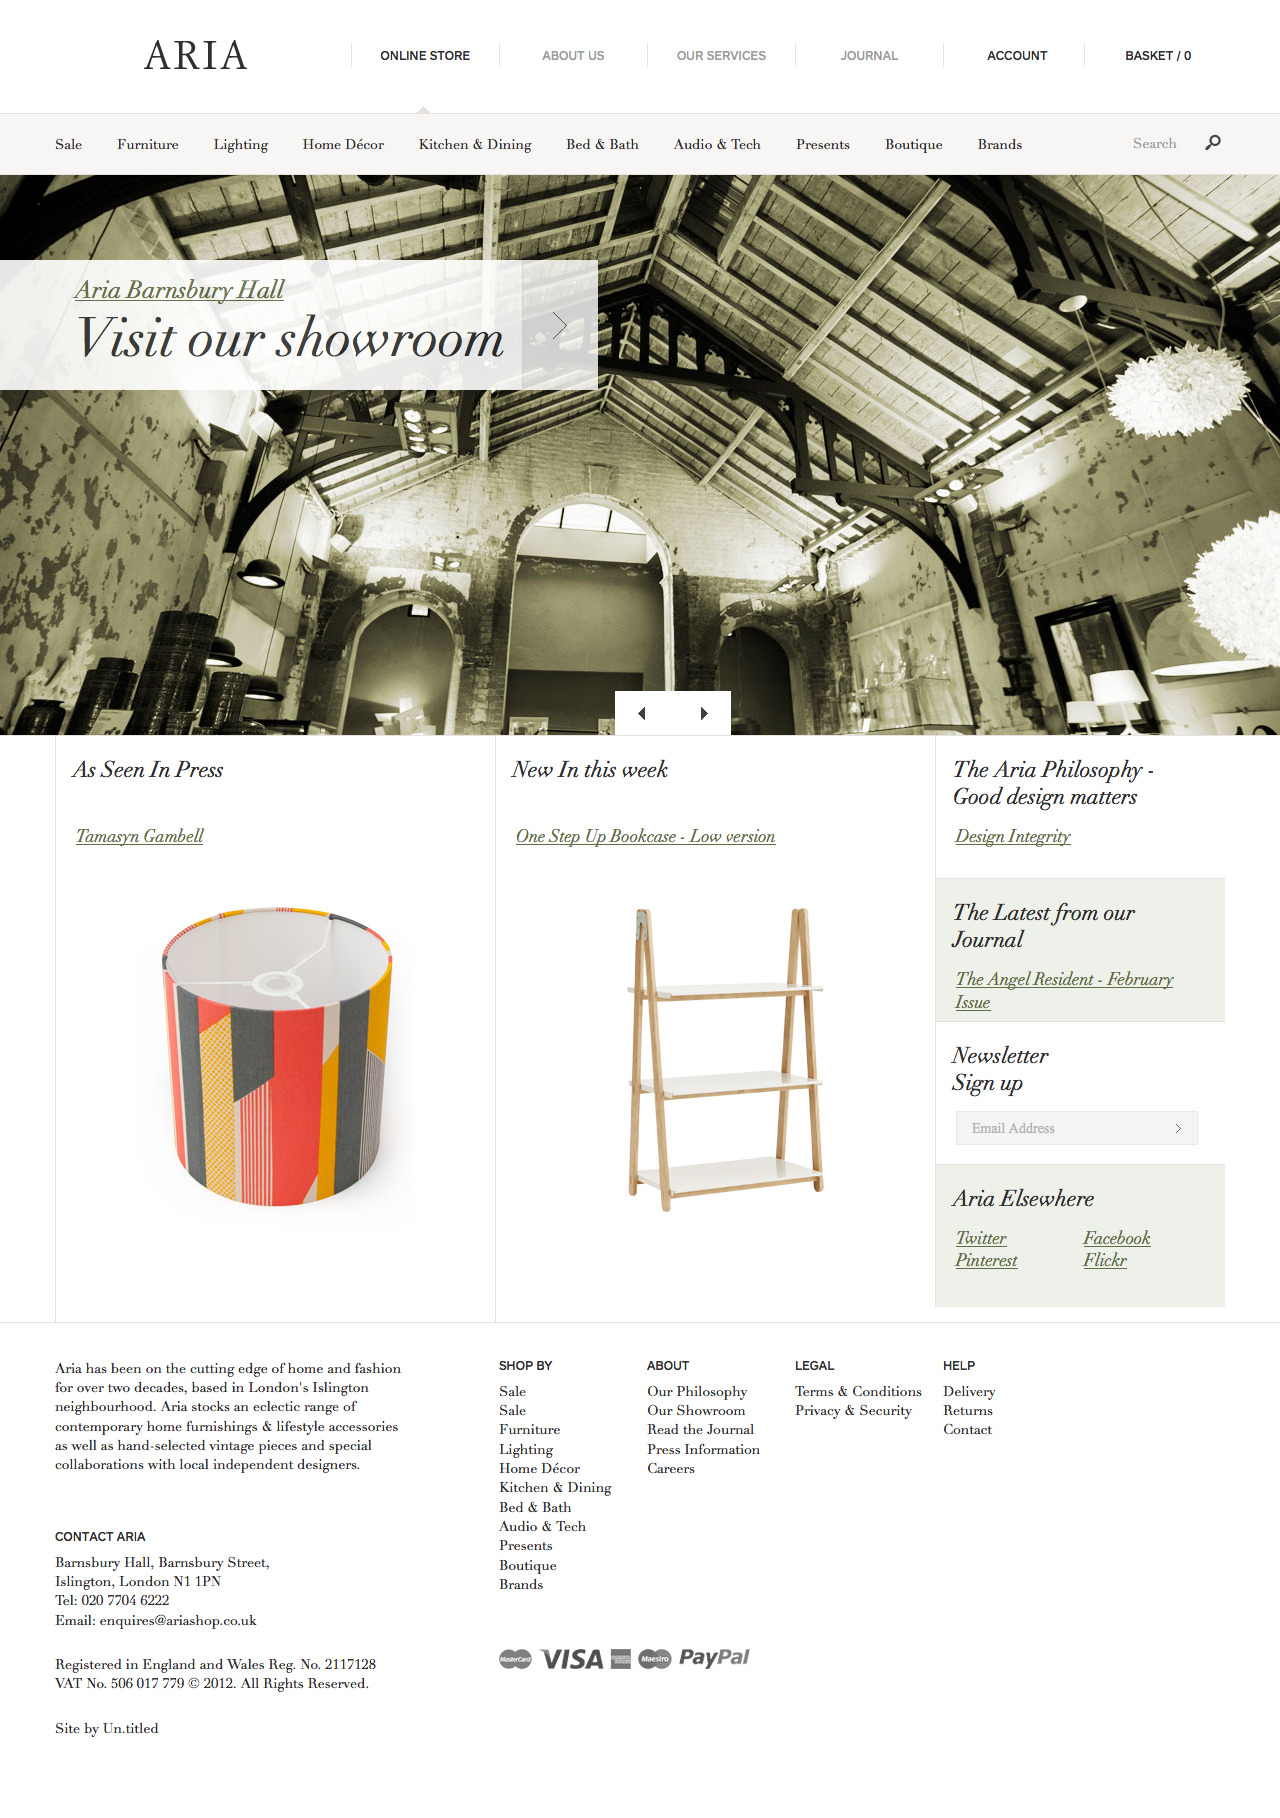 Contemporary Furniture, Design, Lighting & Home Accessories - Call 020 7704 6222 - Aria